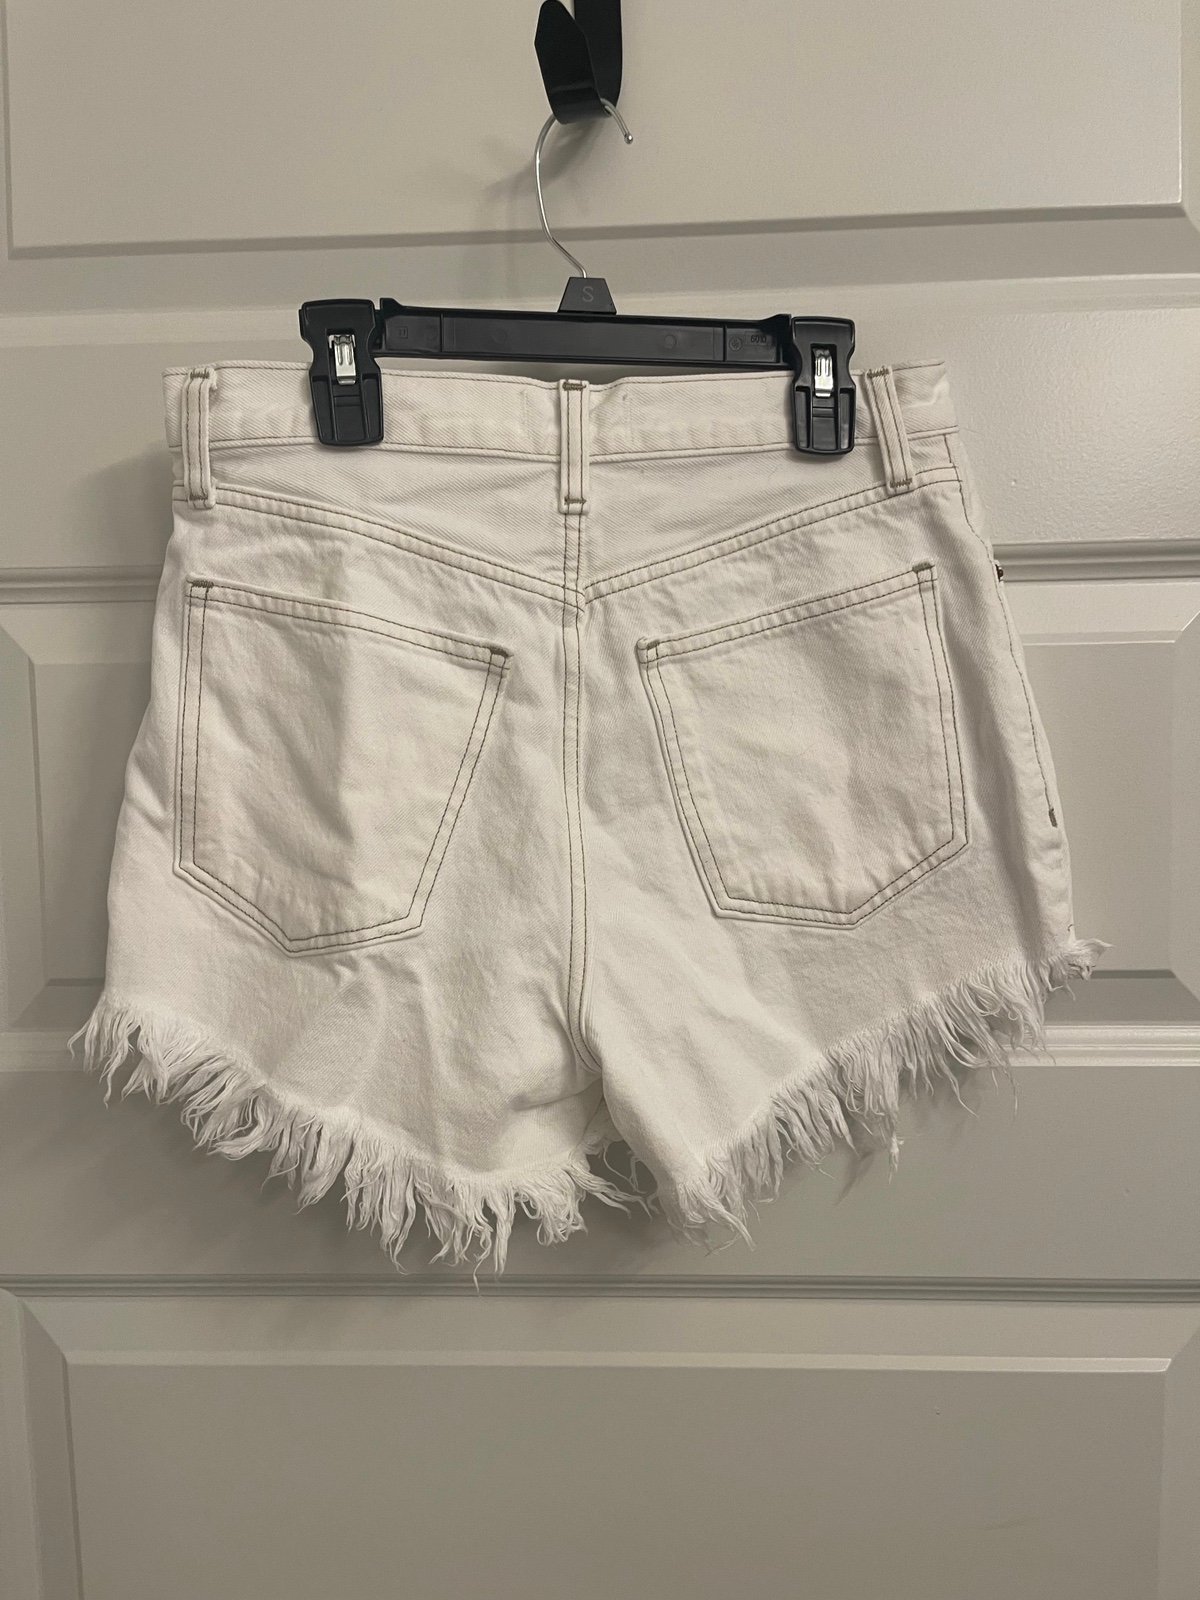 reasonable price abercrombie jean shorts Sz 0/25 pLP41CbJ9 Store Online